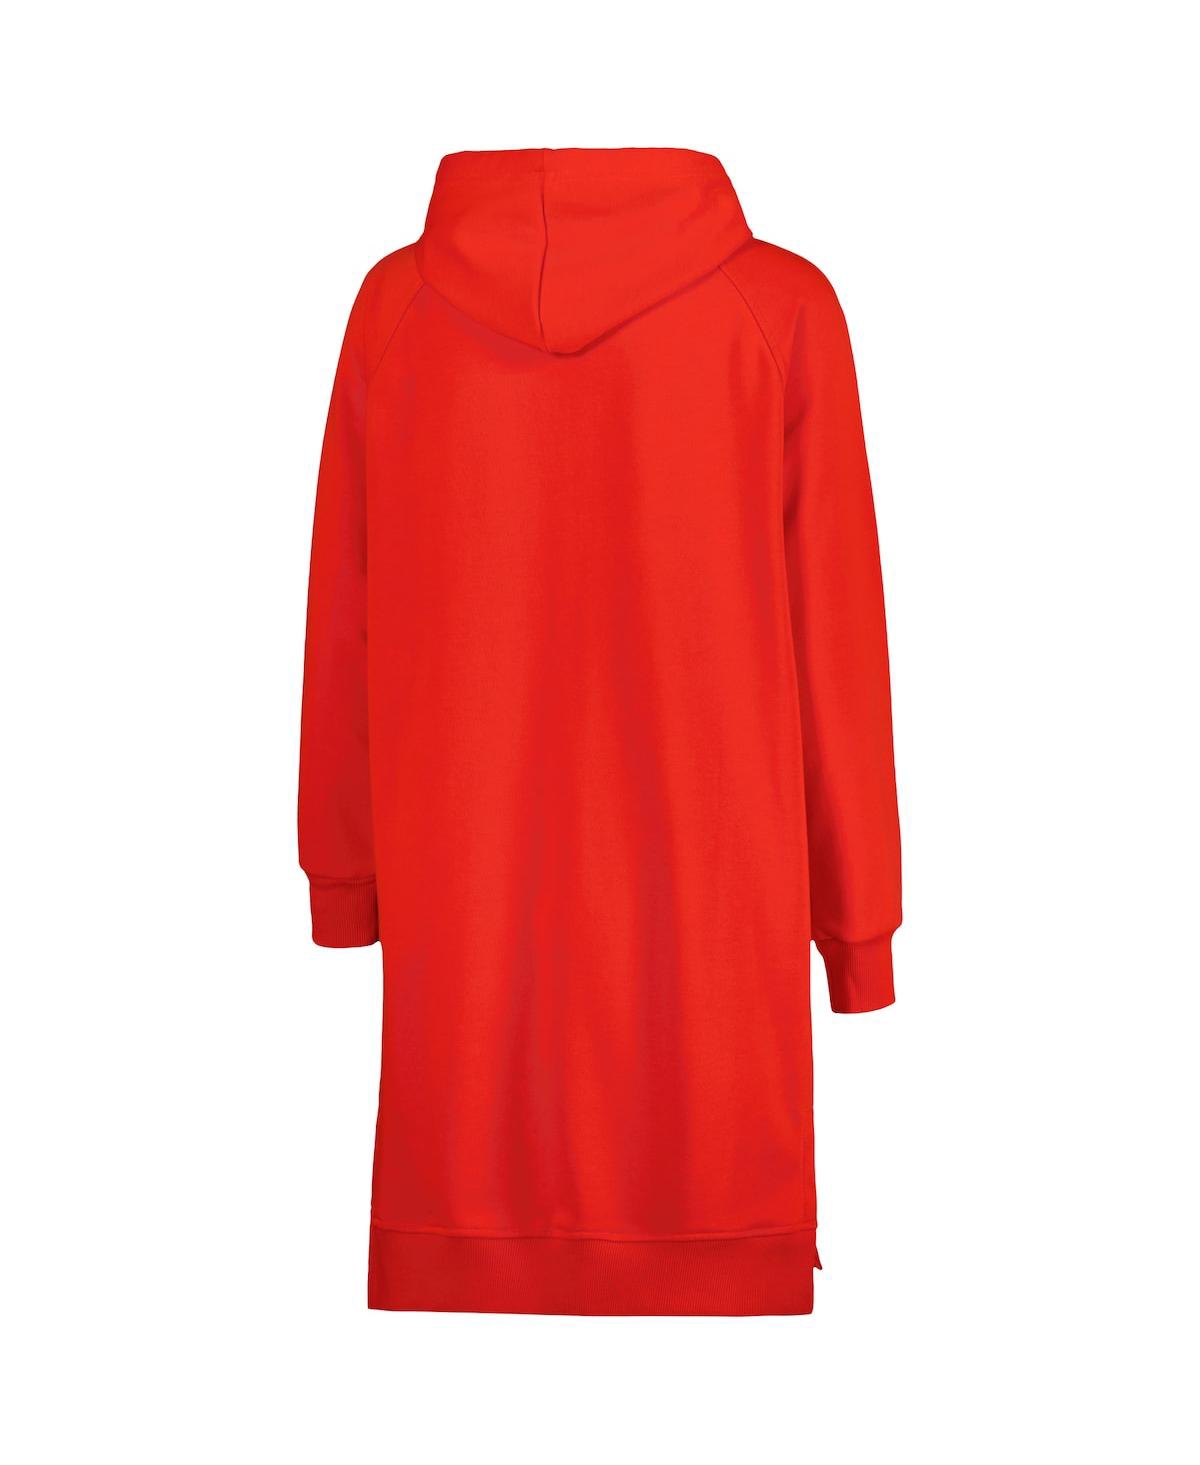 Shop Gameday Couture Women's  Red Wisconsin Badgers Take A Knee Raglan Hooded Sweatshirt Dress